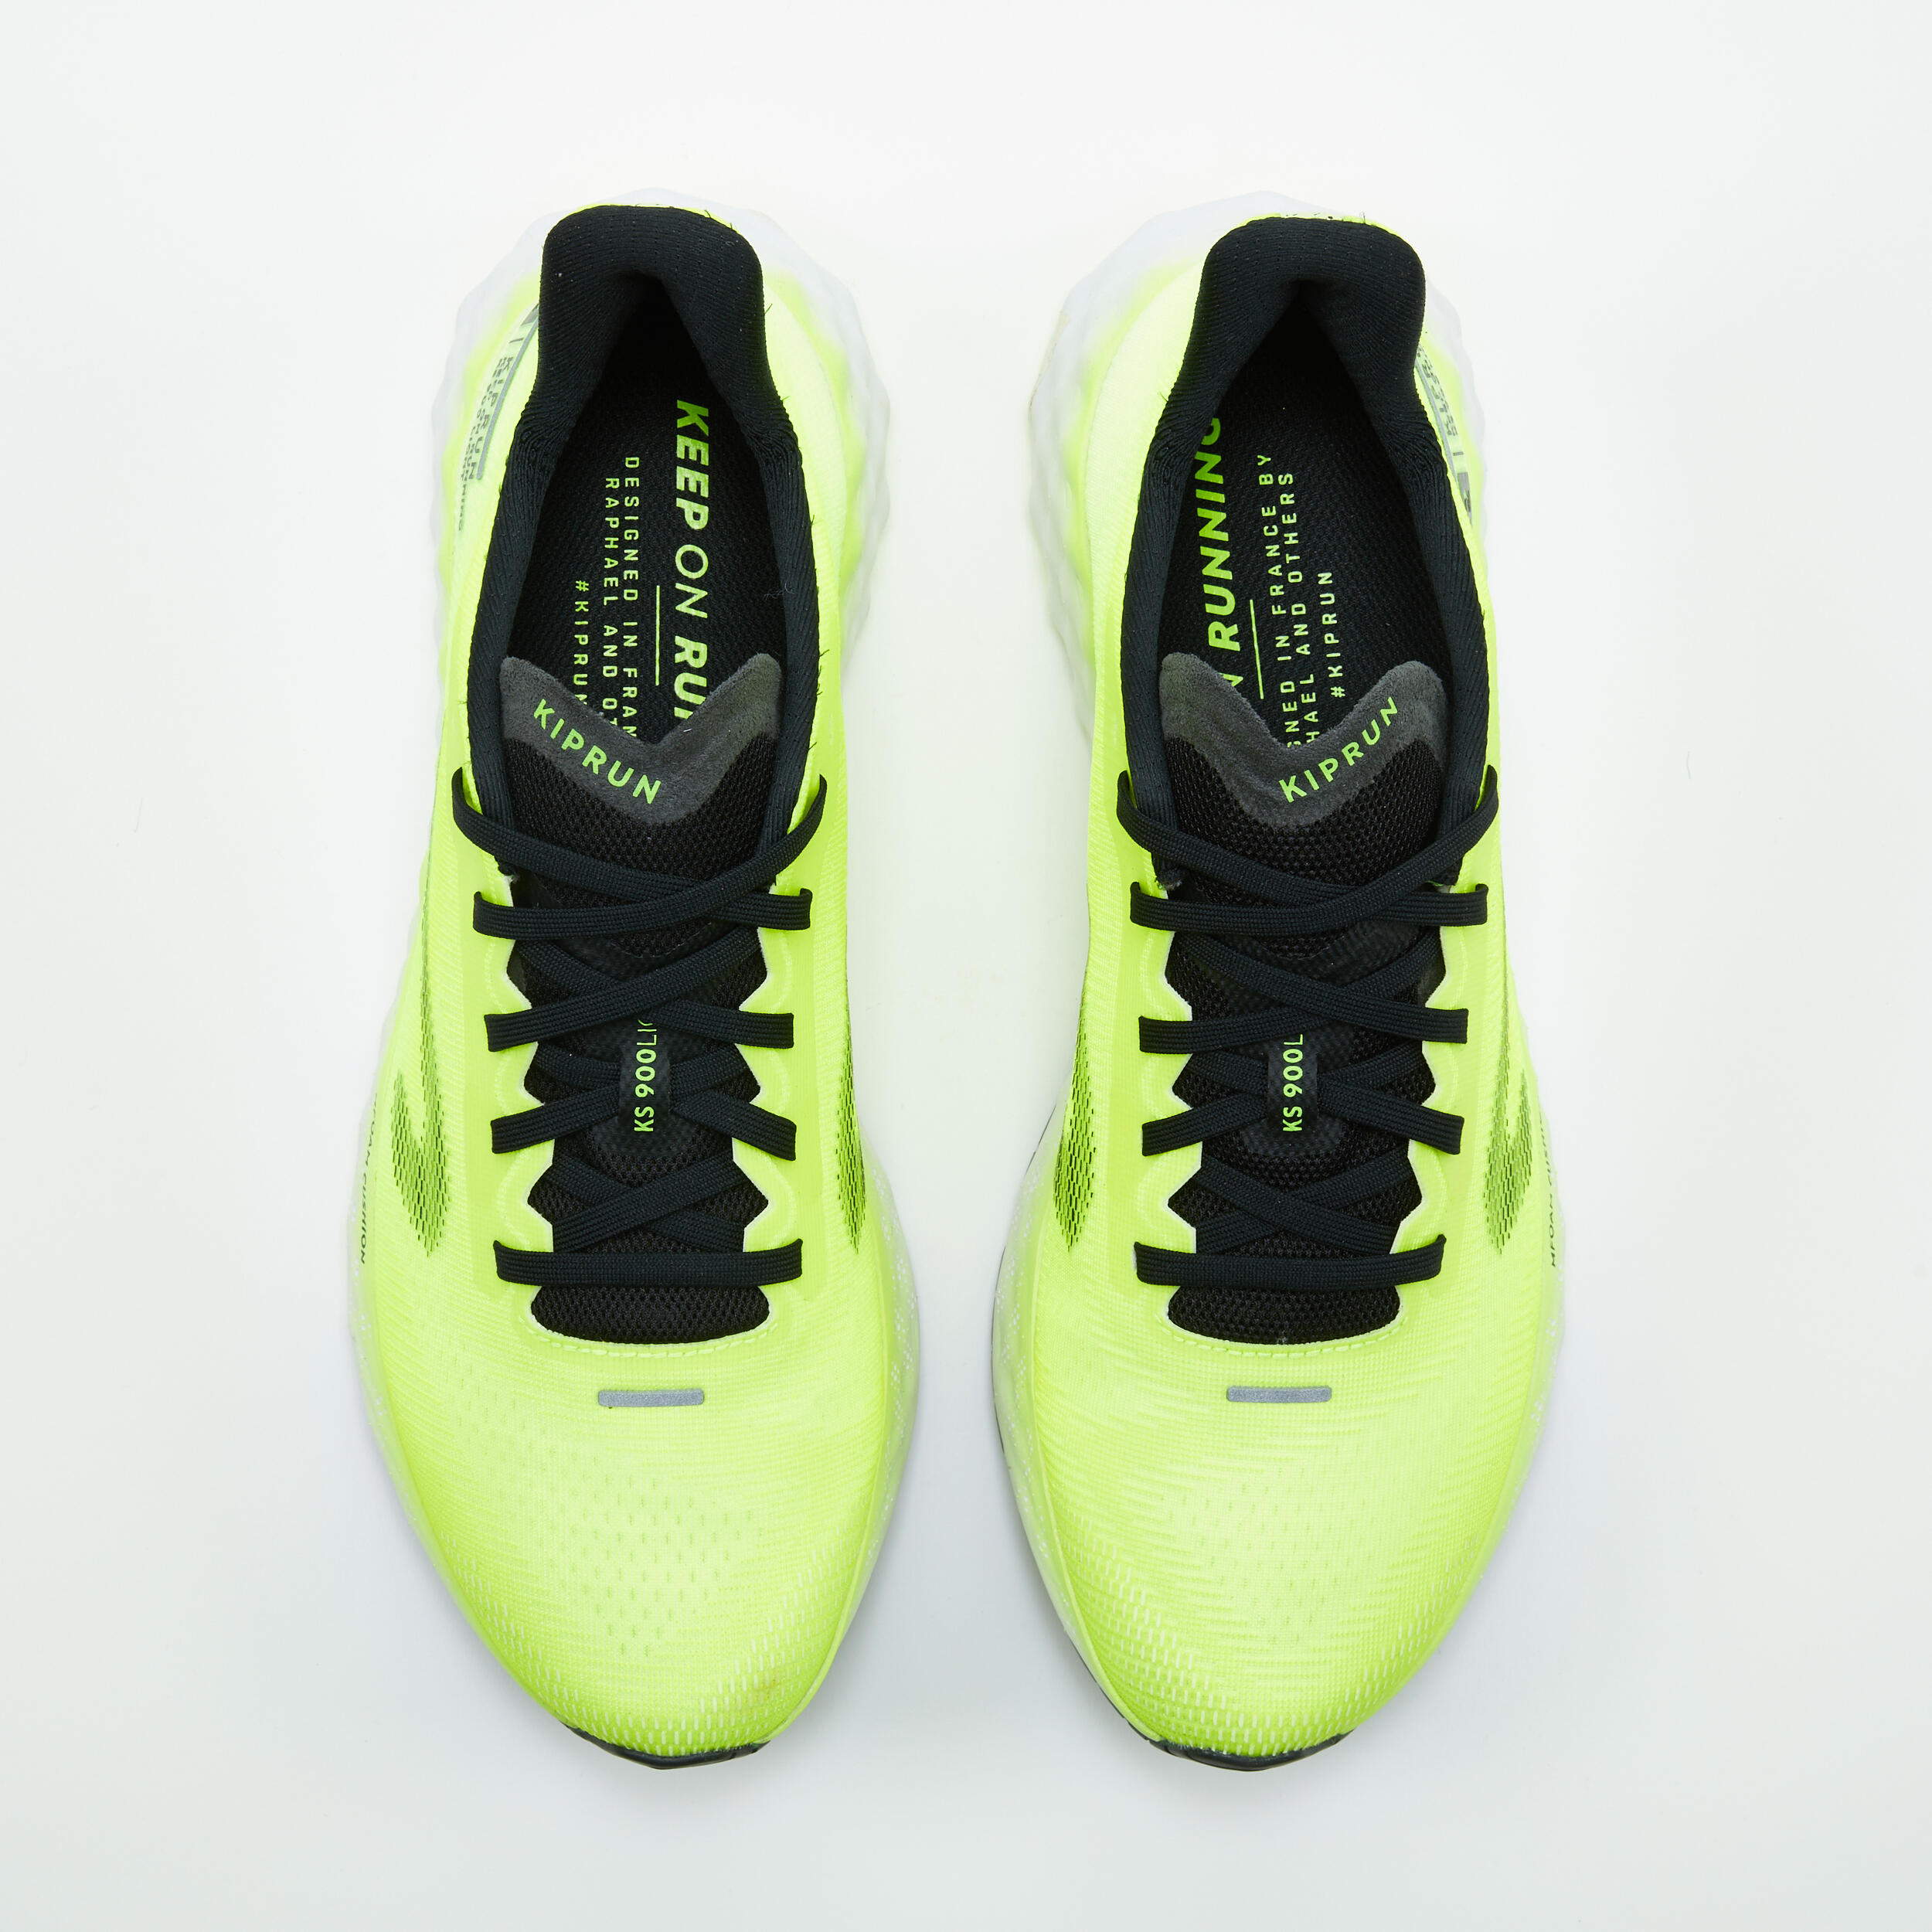 Men's Running Shoes - KS 900 Light Yellow - [EN] fluo pale yellow